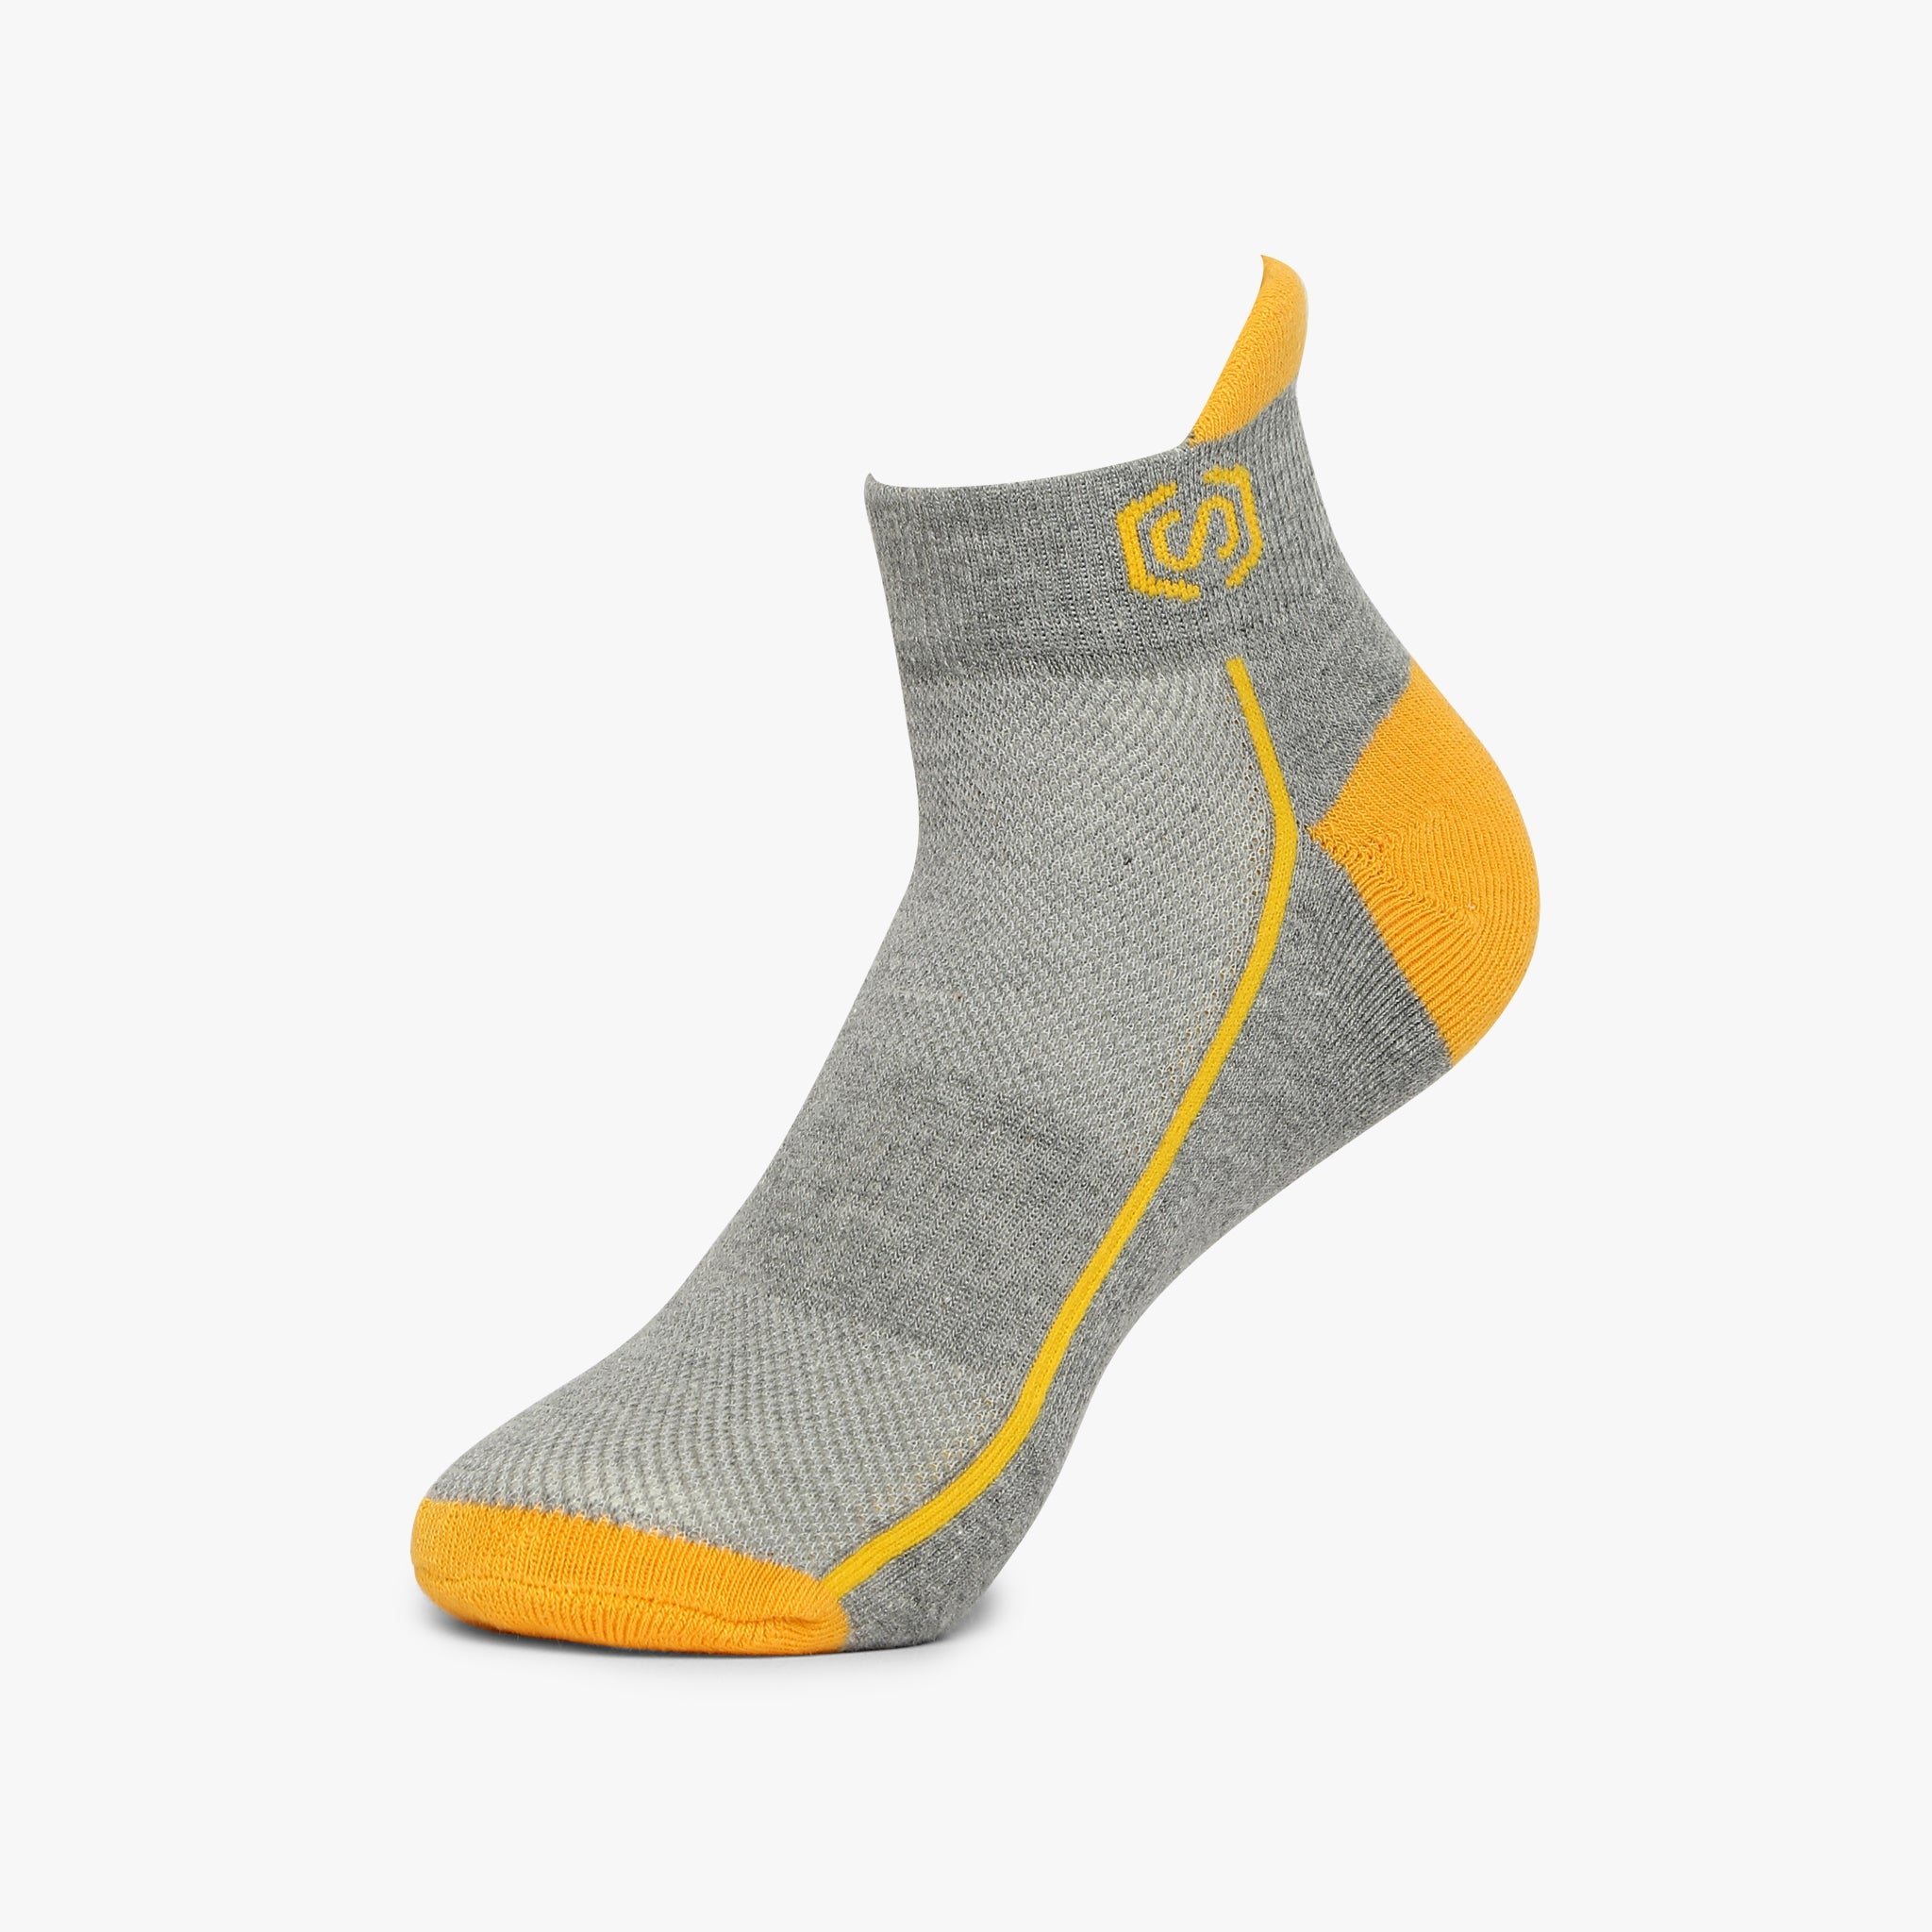 Cotton Ankle Length Socks